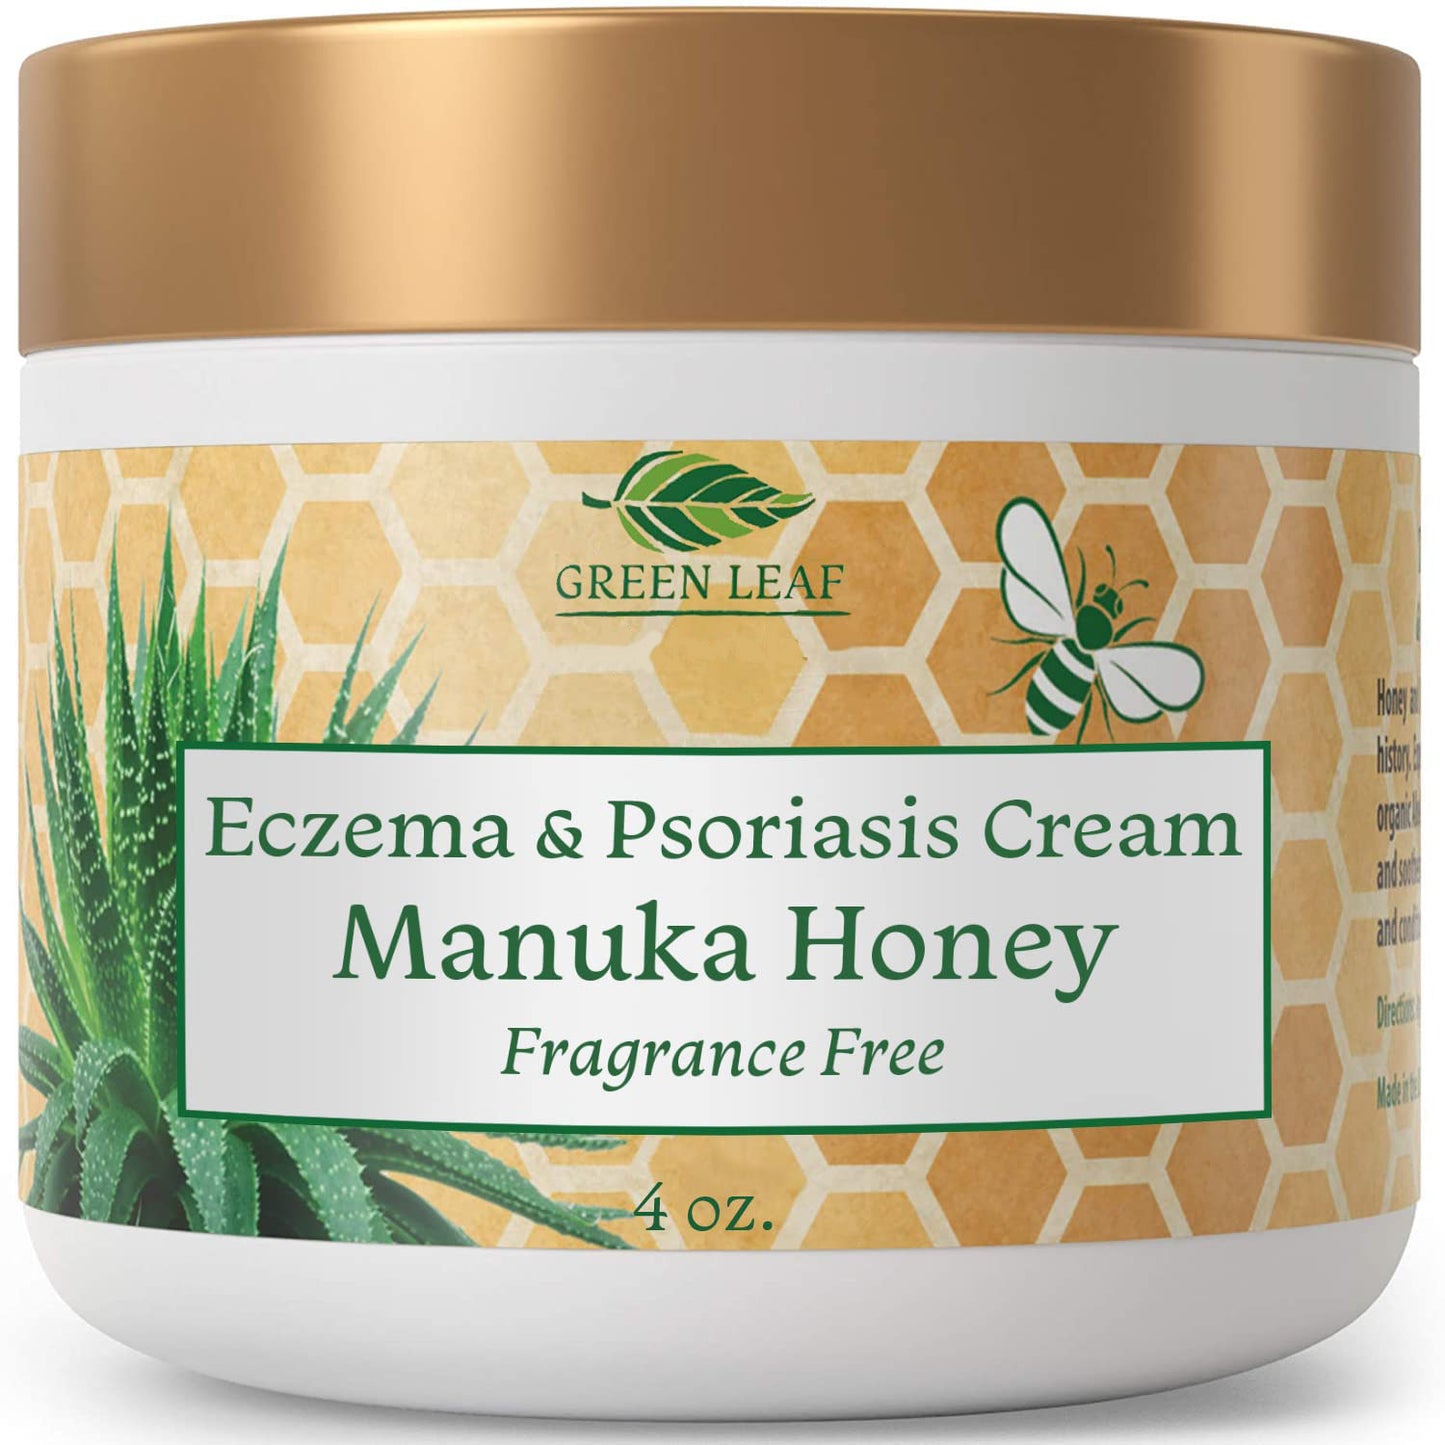 Eczema & Psoriasis Cream with Manuka Honey (Fragrance Free)